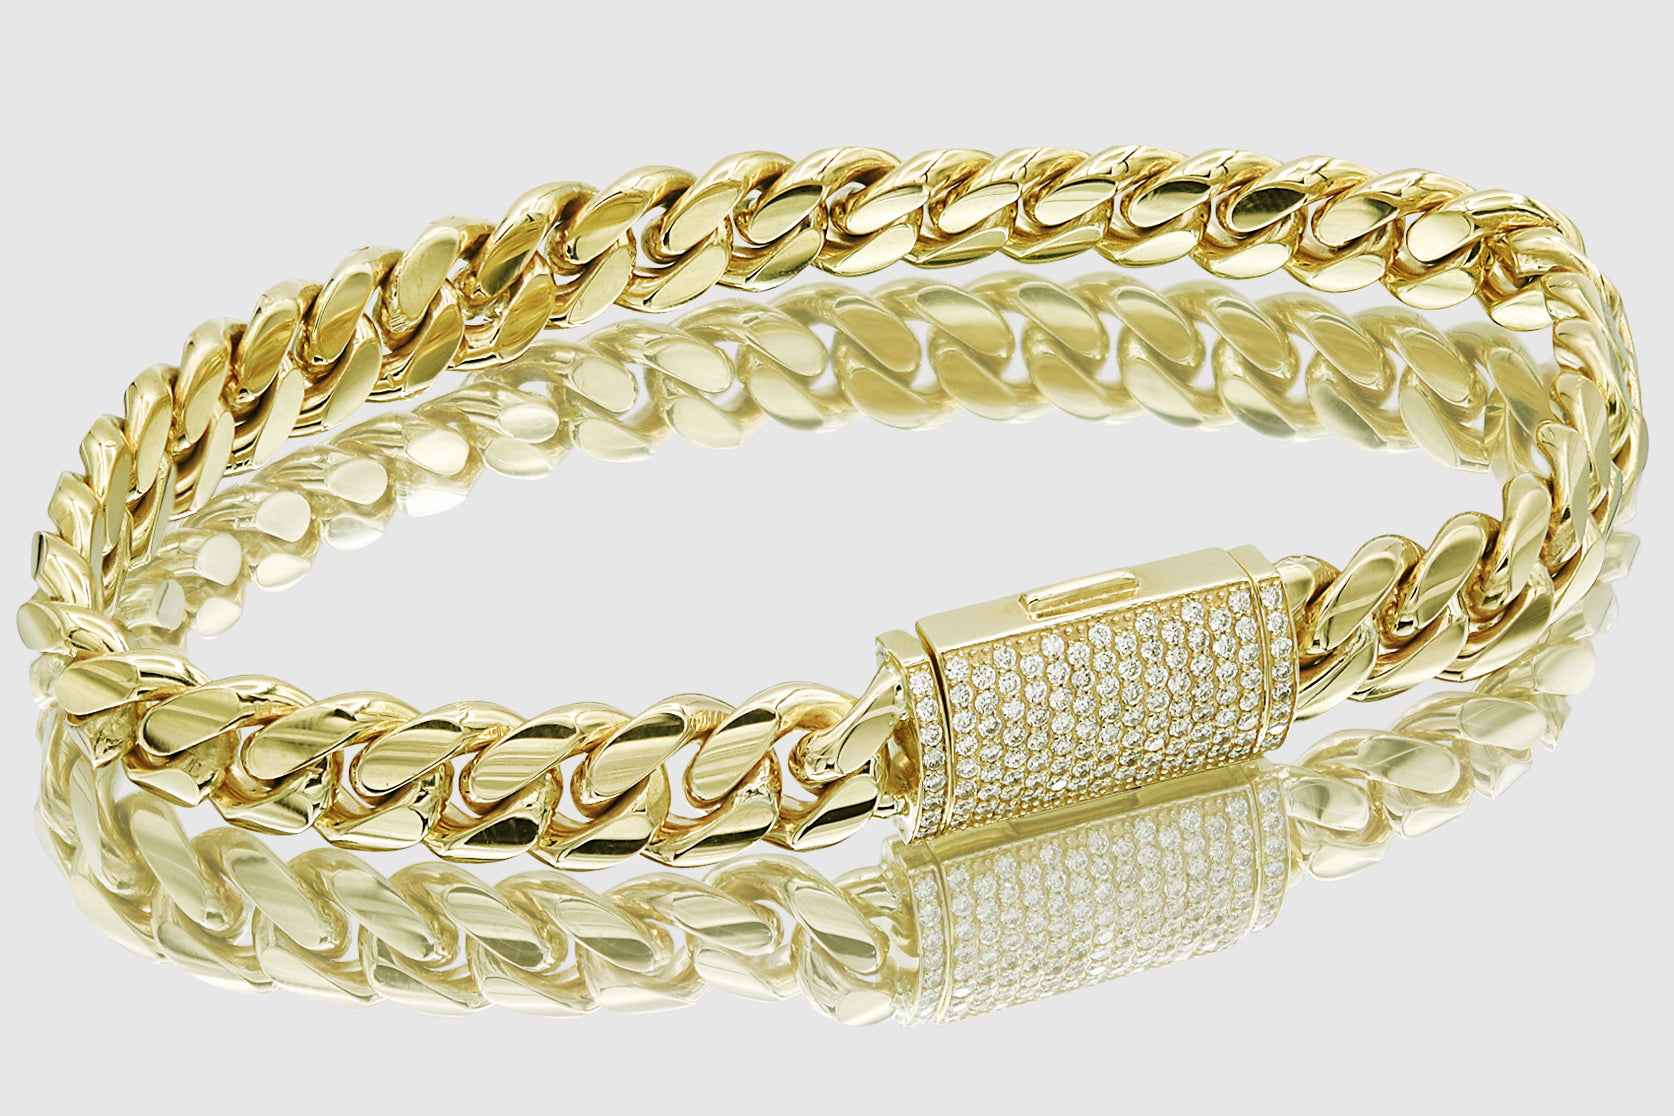 Uverly 10K Solid Miami Cuban Gold Diamond Lock Bracelet